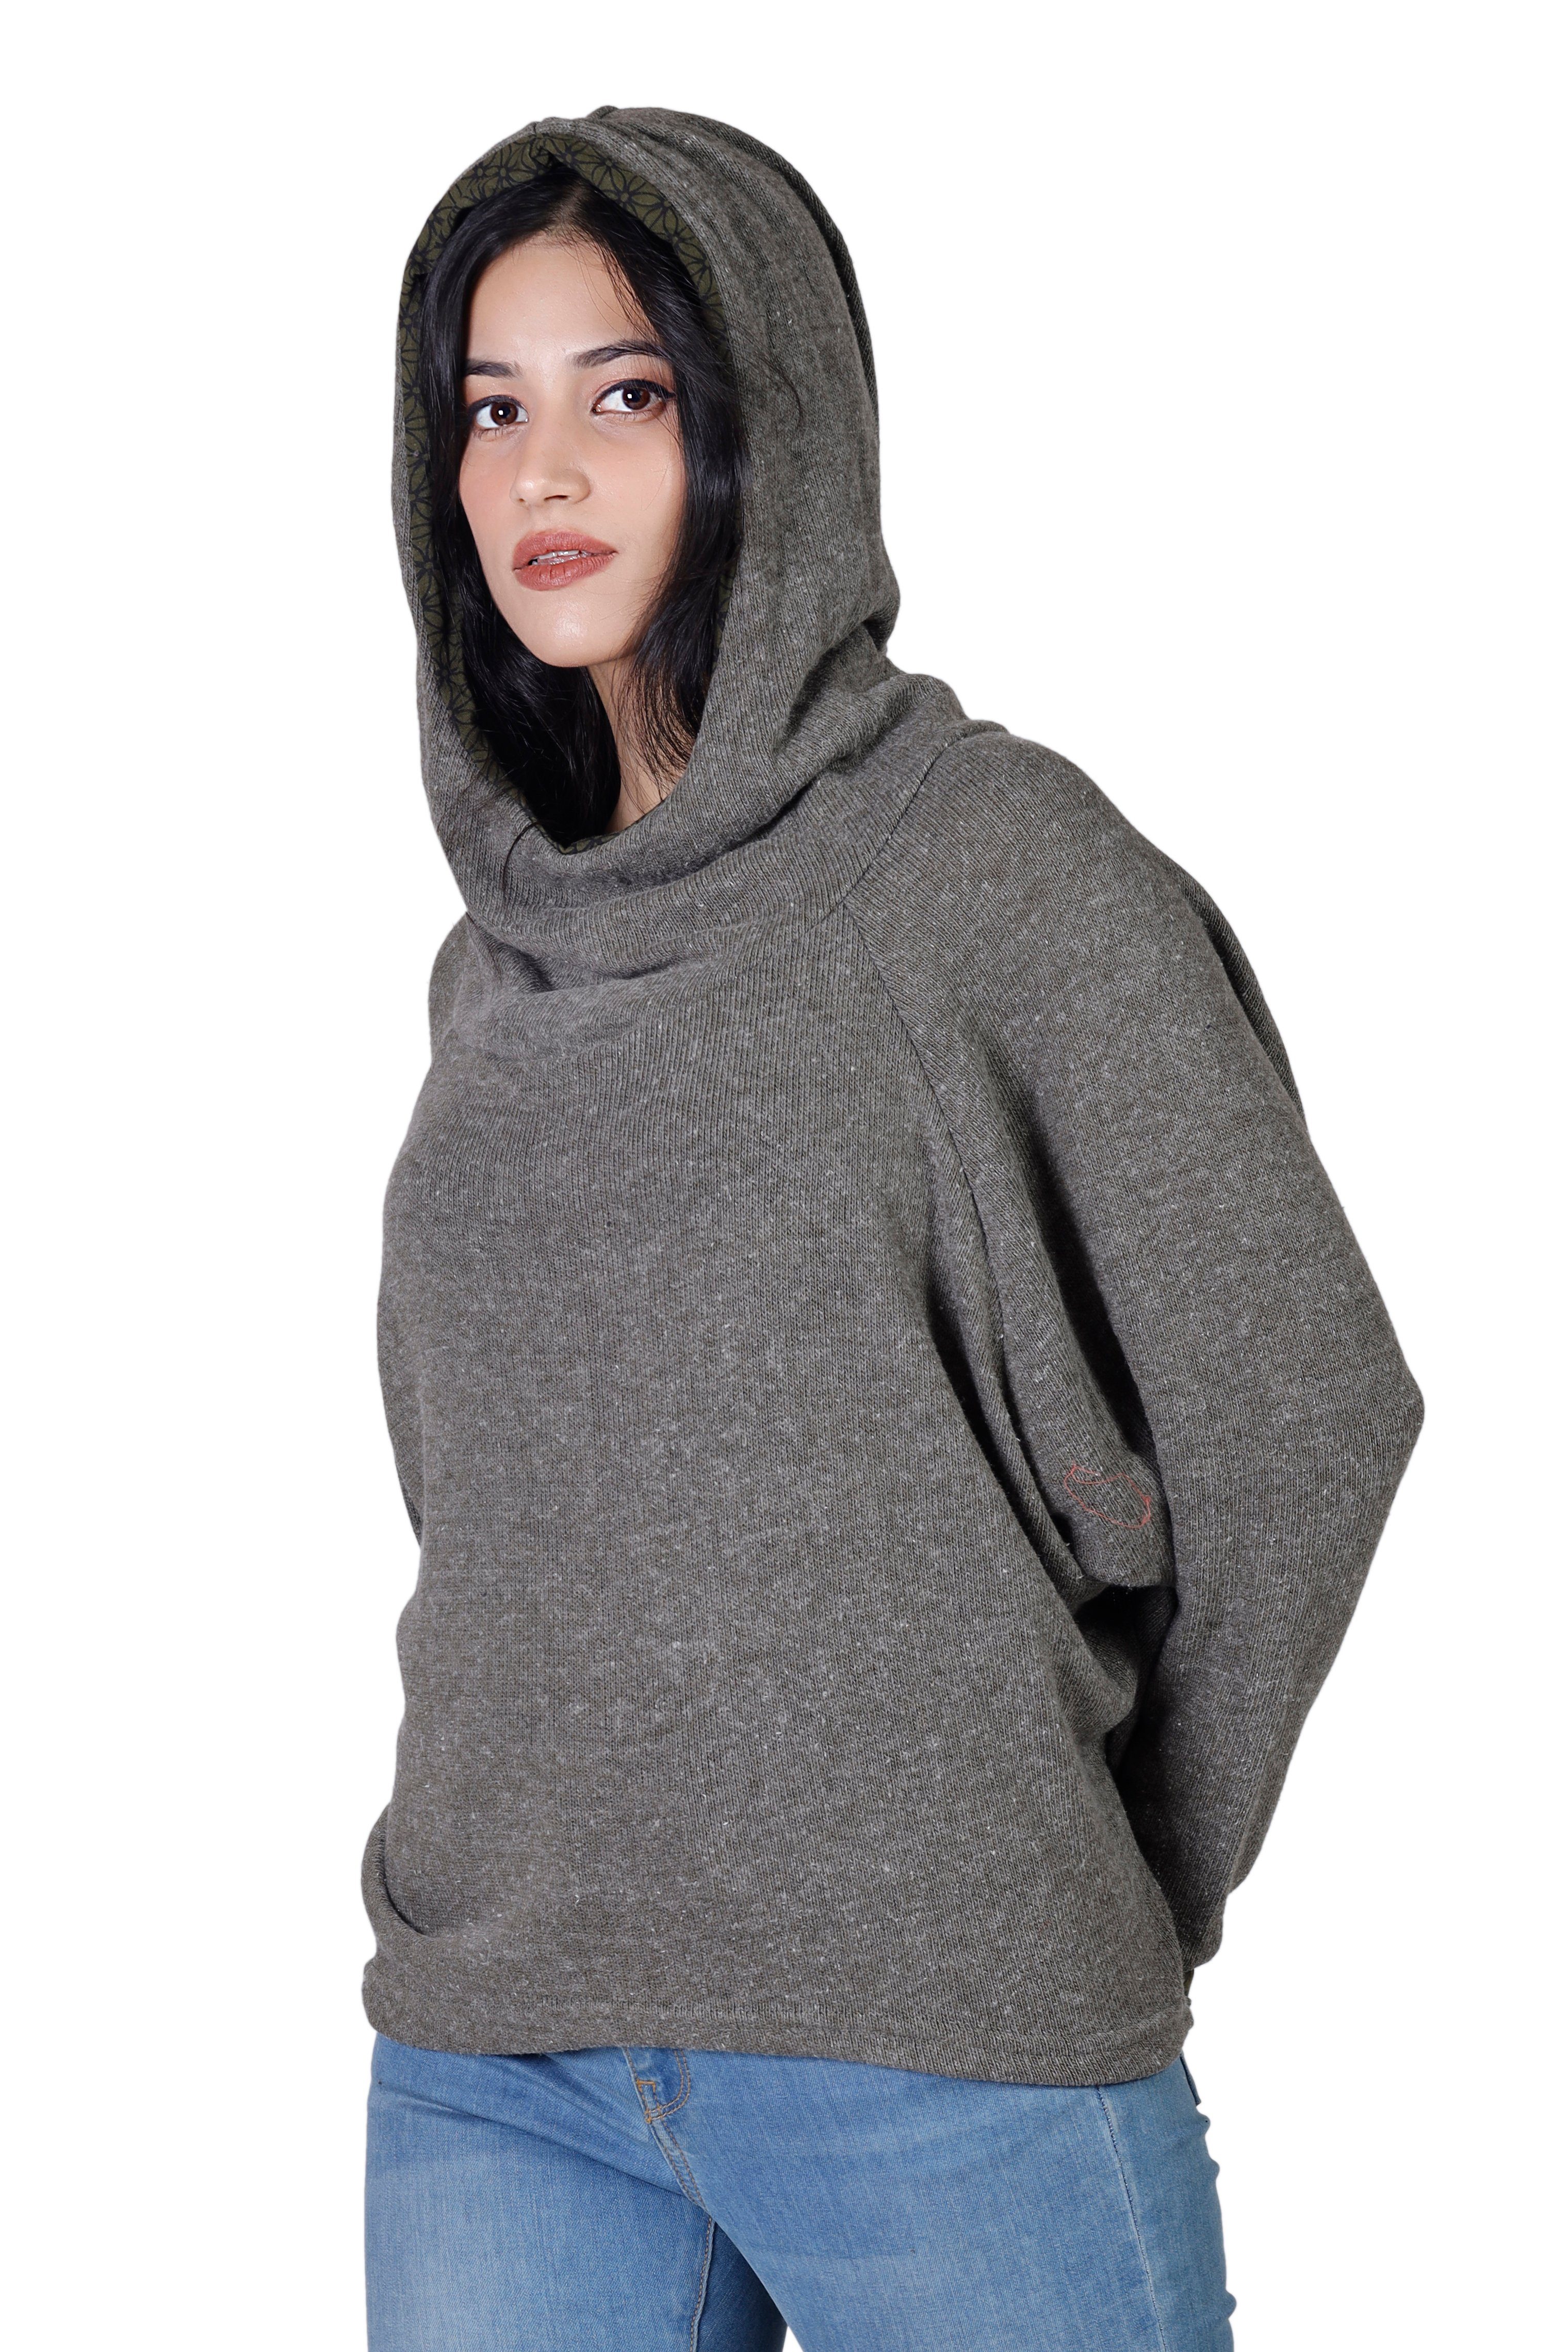 Sweatshirt, Longsleeve alternative Pullover, Hoody, khakigrün Kapuzenpullover -.. Bekleidung Guru-Shop